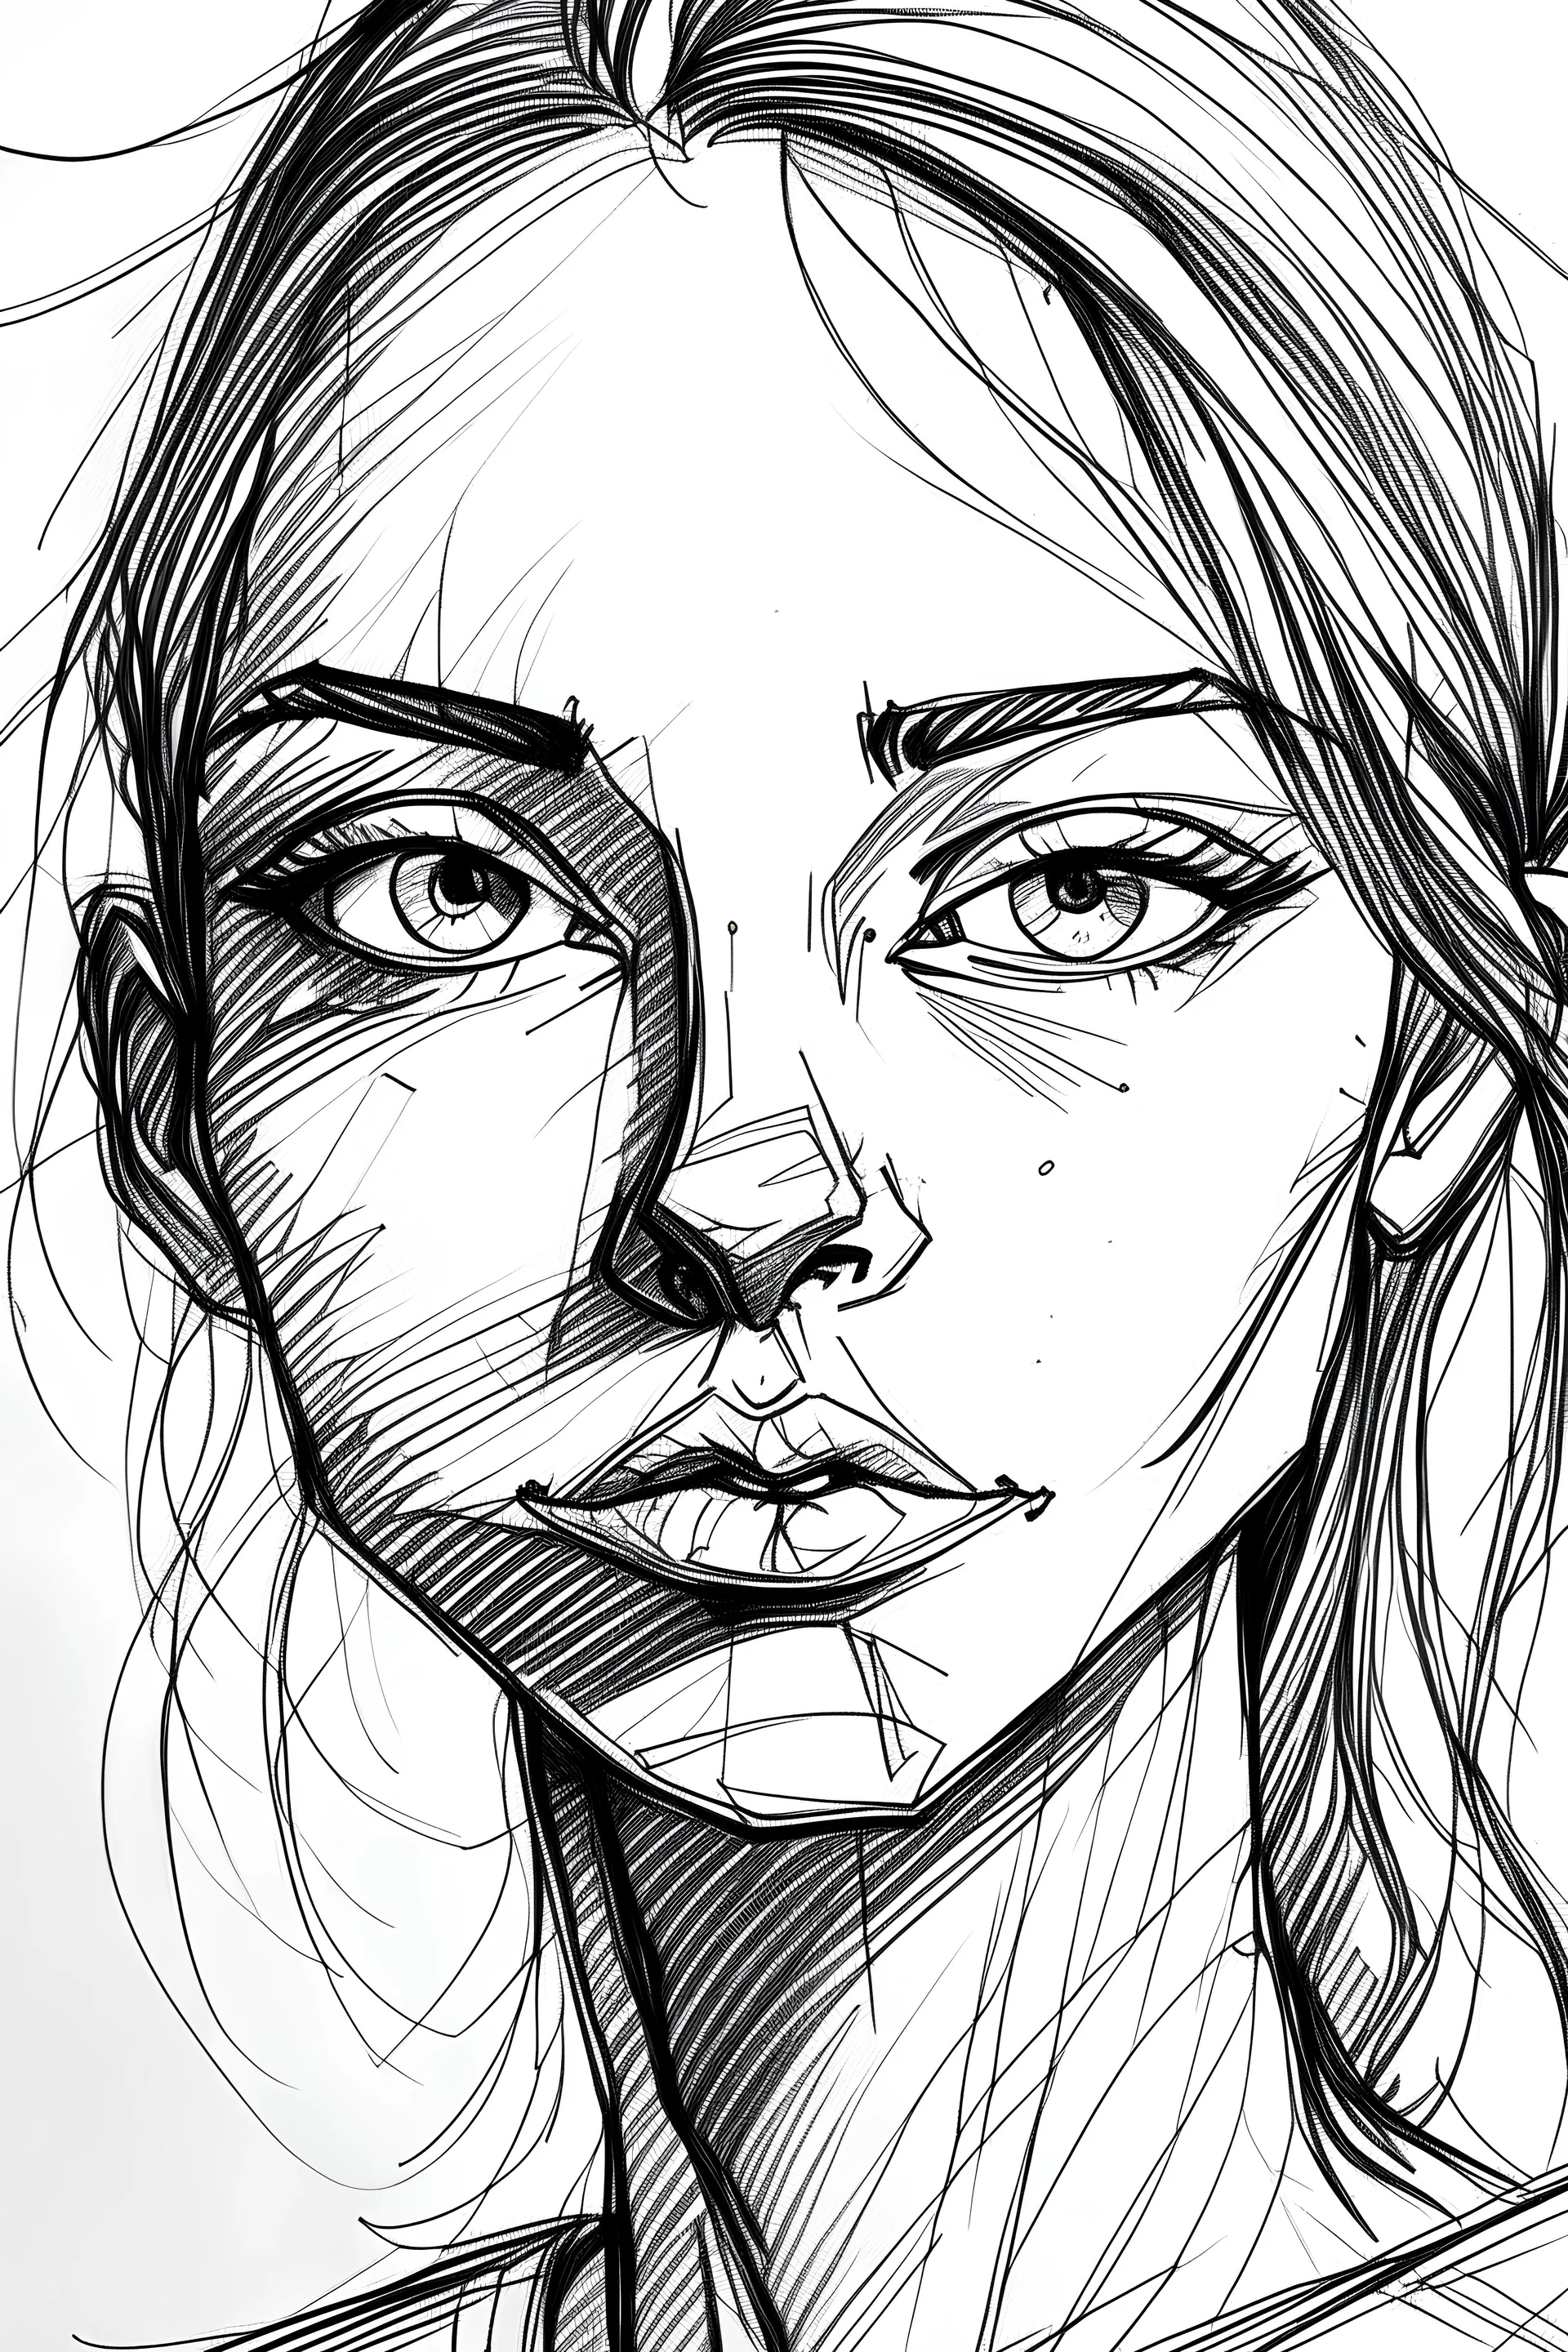 random face drawing